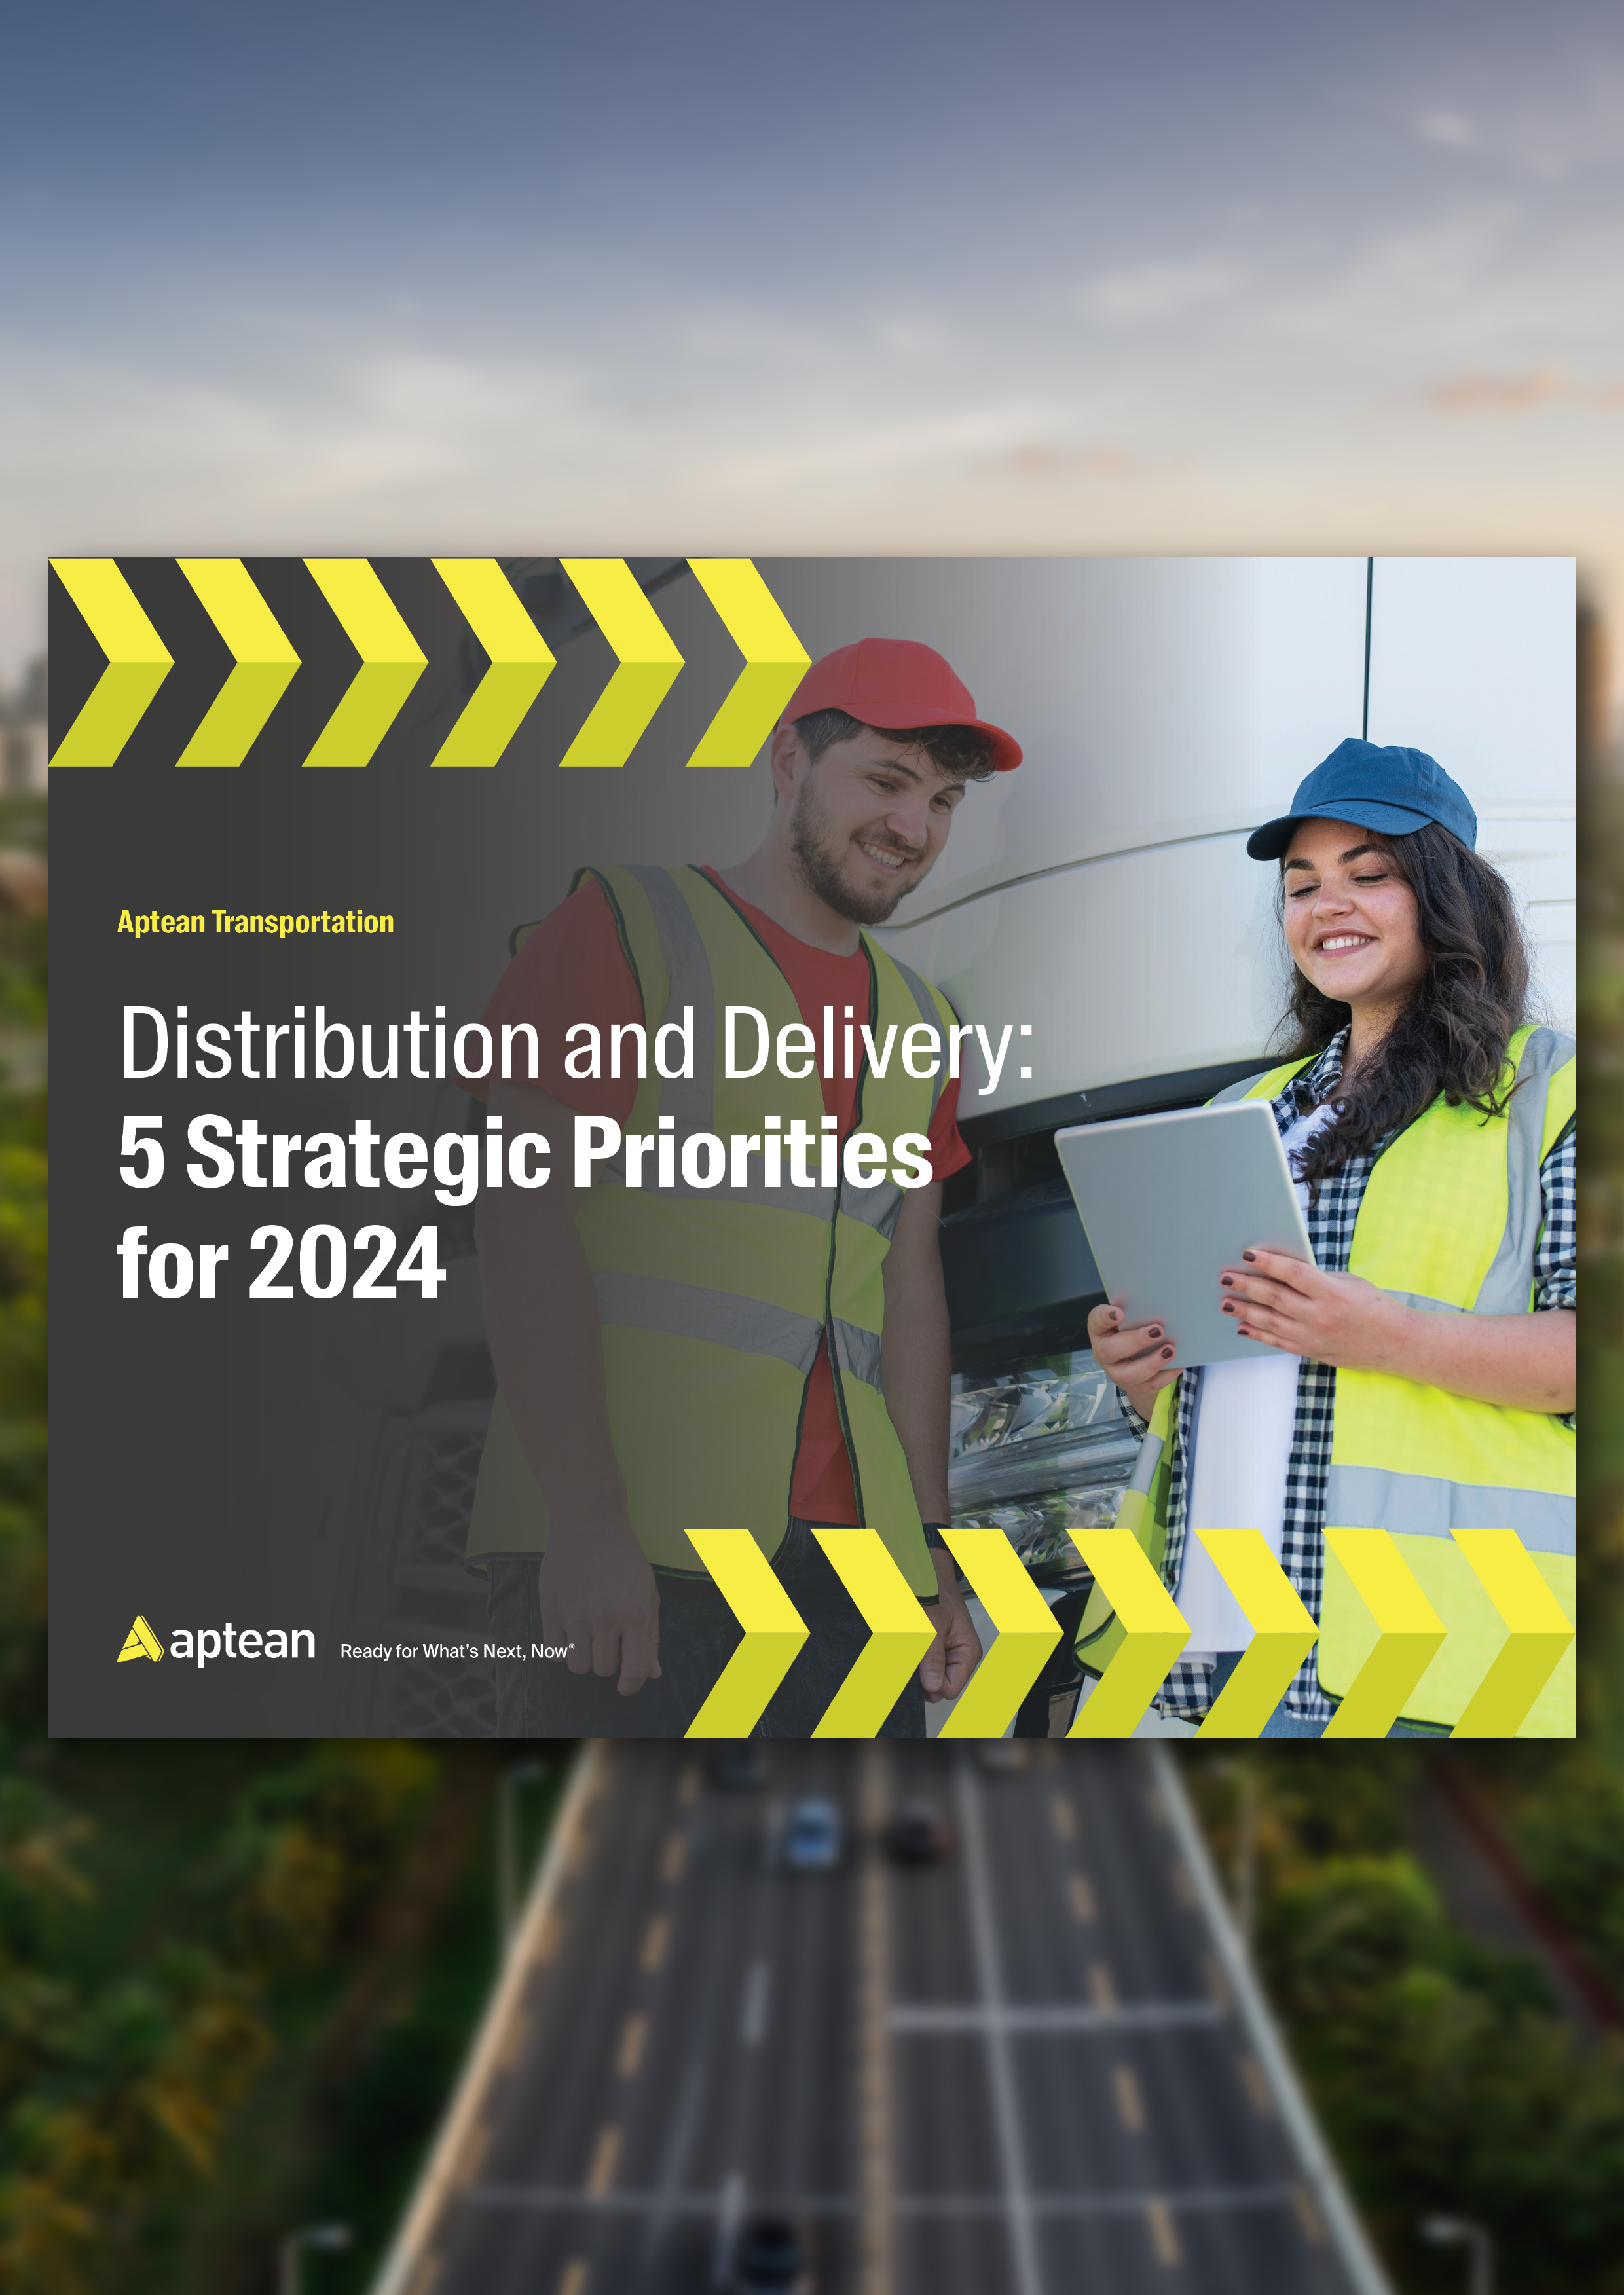 Aptean lb 5 strategic priorities ebook 595x841